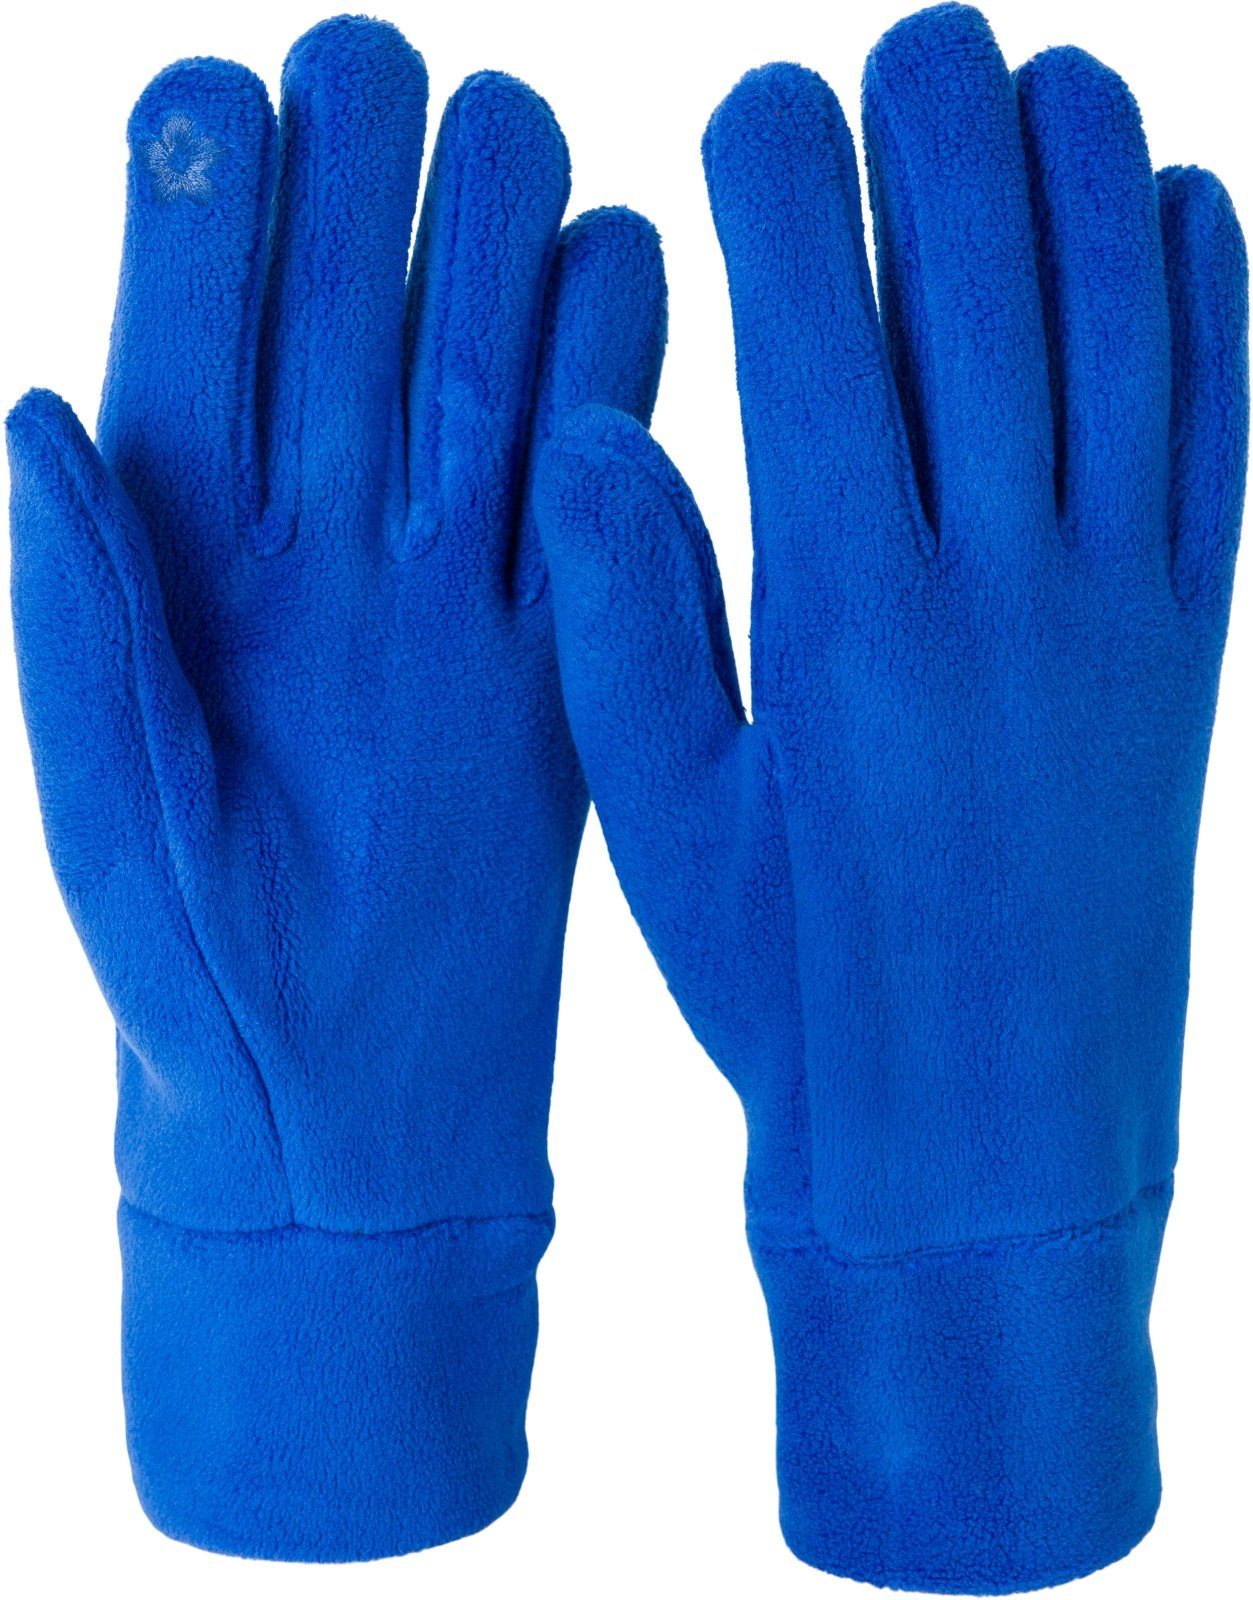 styleBREAKER Fleecehandschuhe Einfarbige Touchscreen Fleece Handschuhe Royalblau